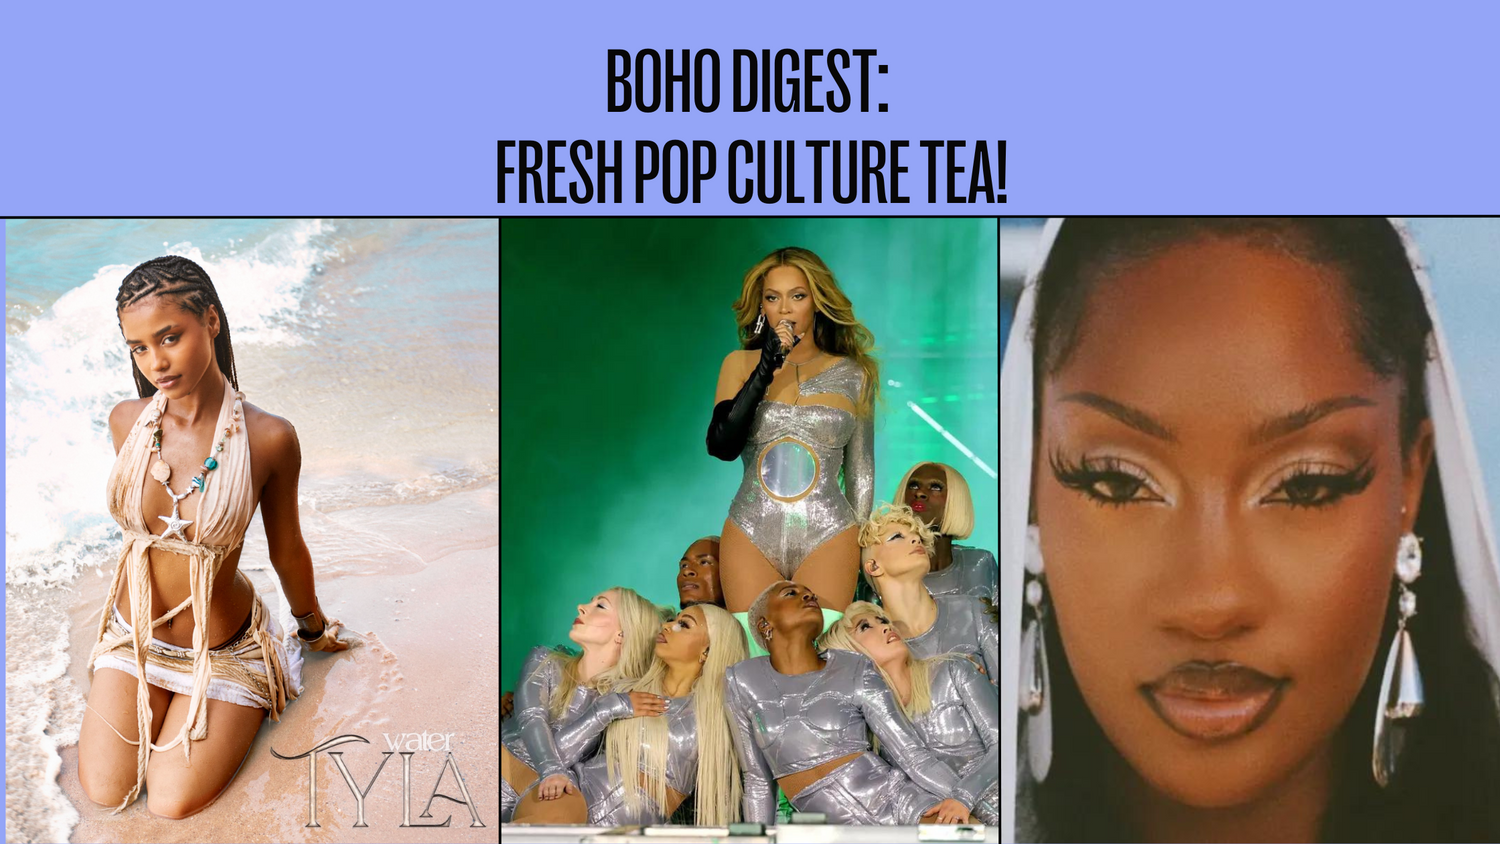 THE BOHO DIGEST:  FRESH POP CULTURE TEA!